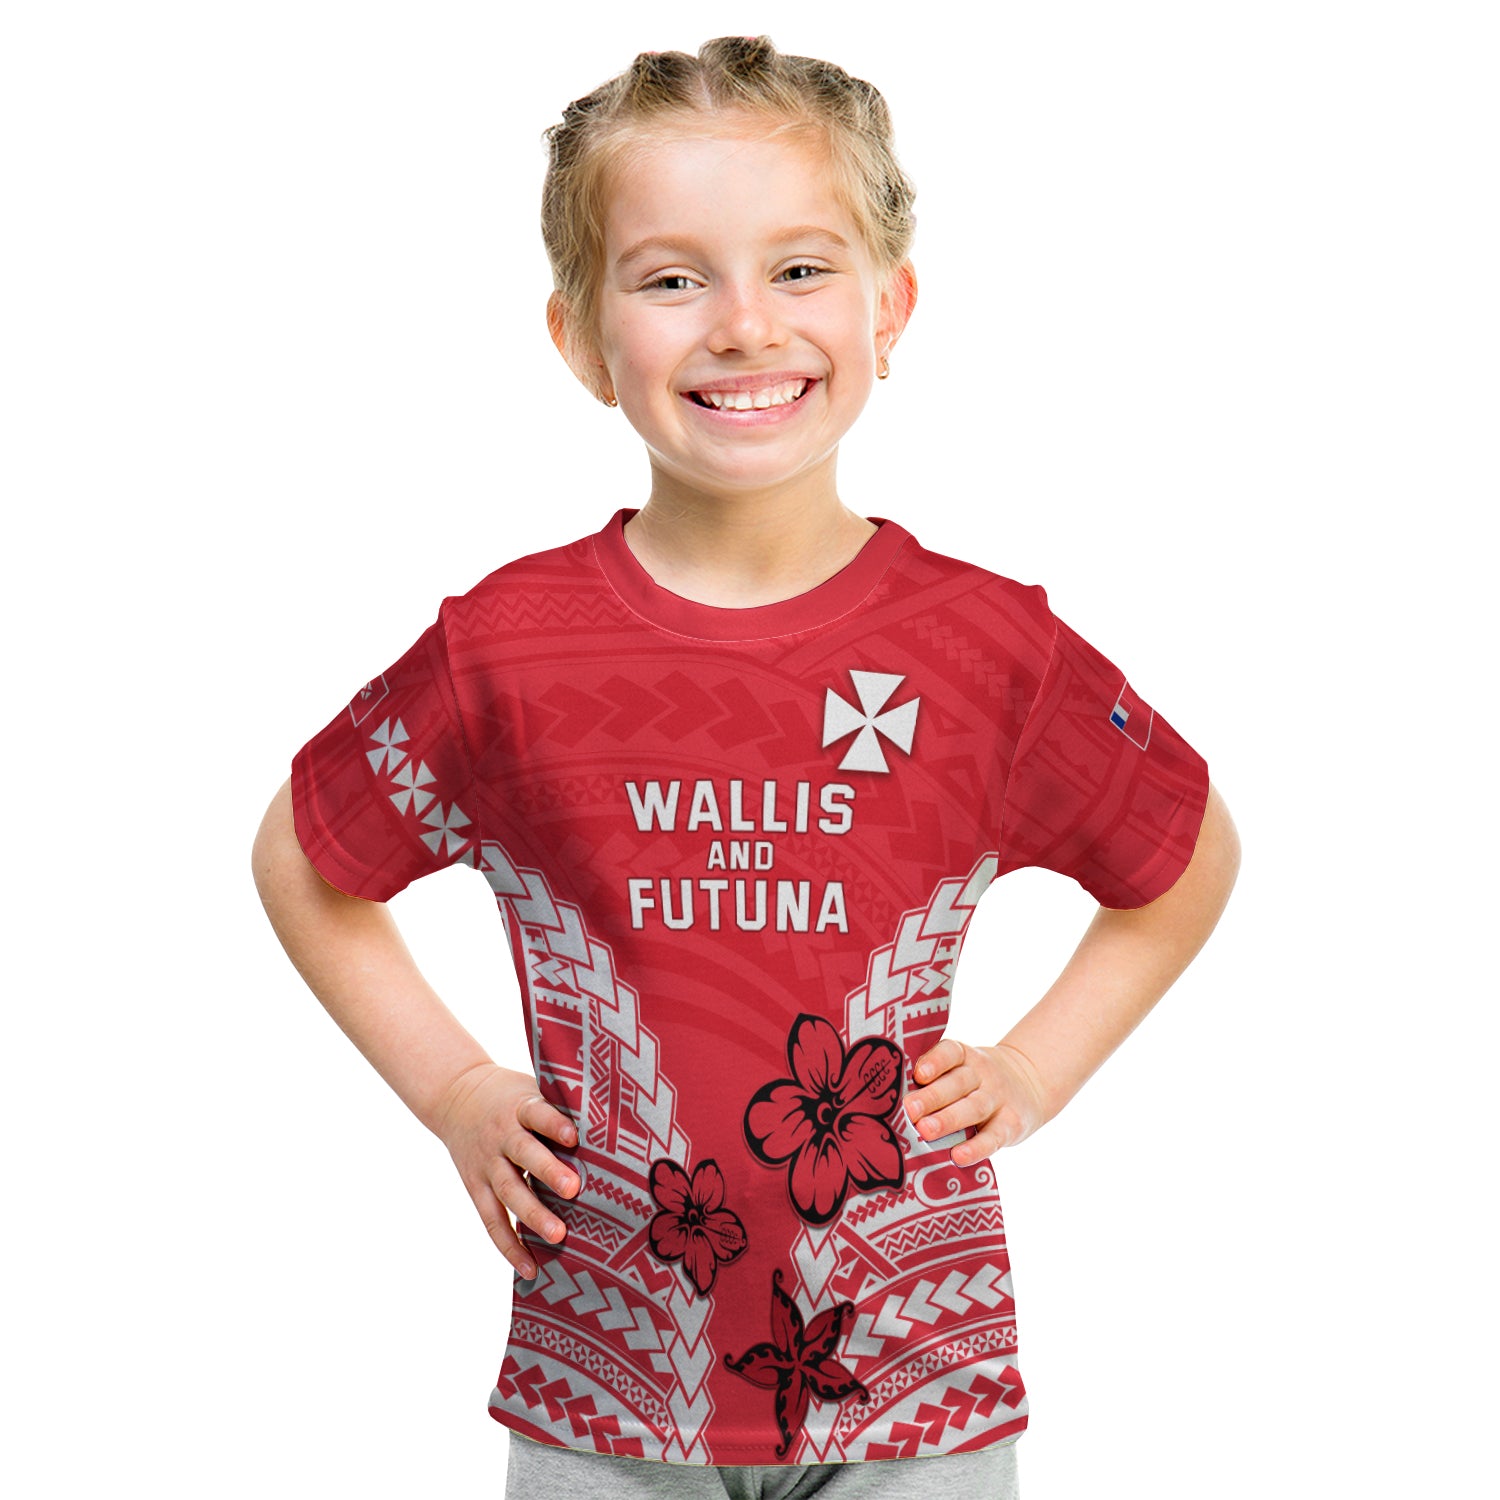 Wallis And Futuna T-Shirt Kid Impressive LT13 - Polynesian Pride